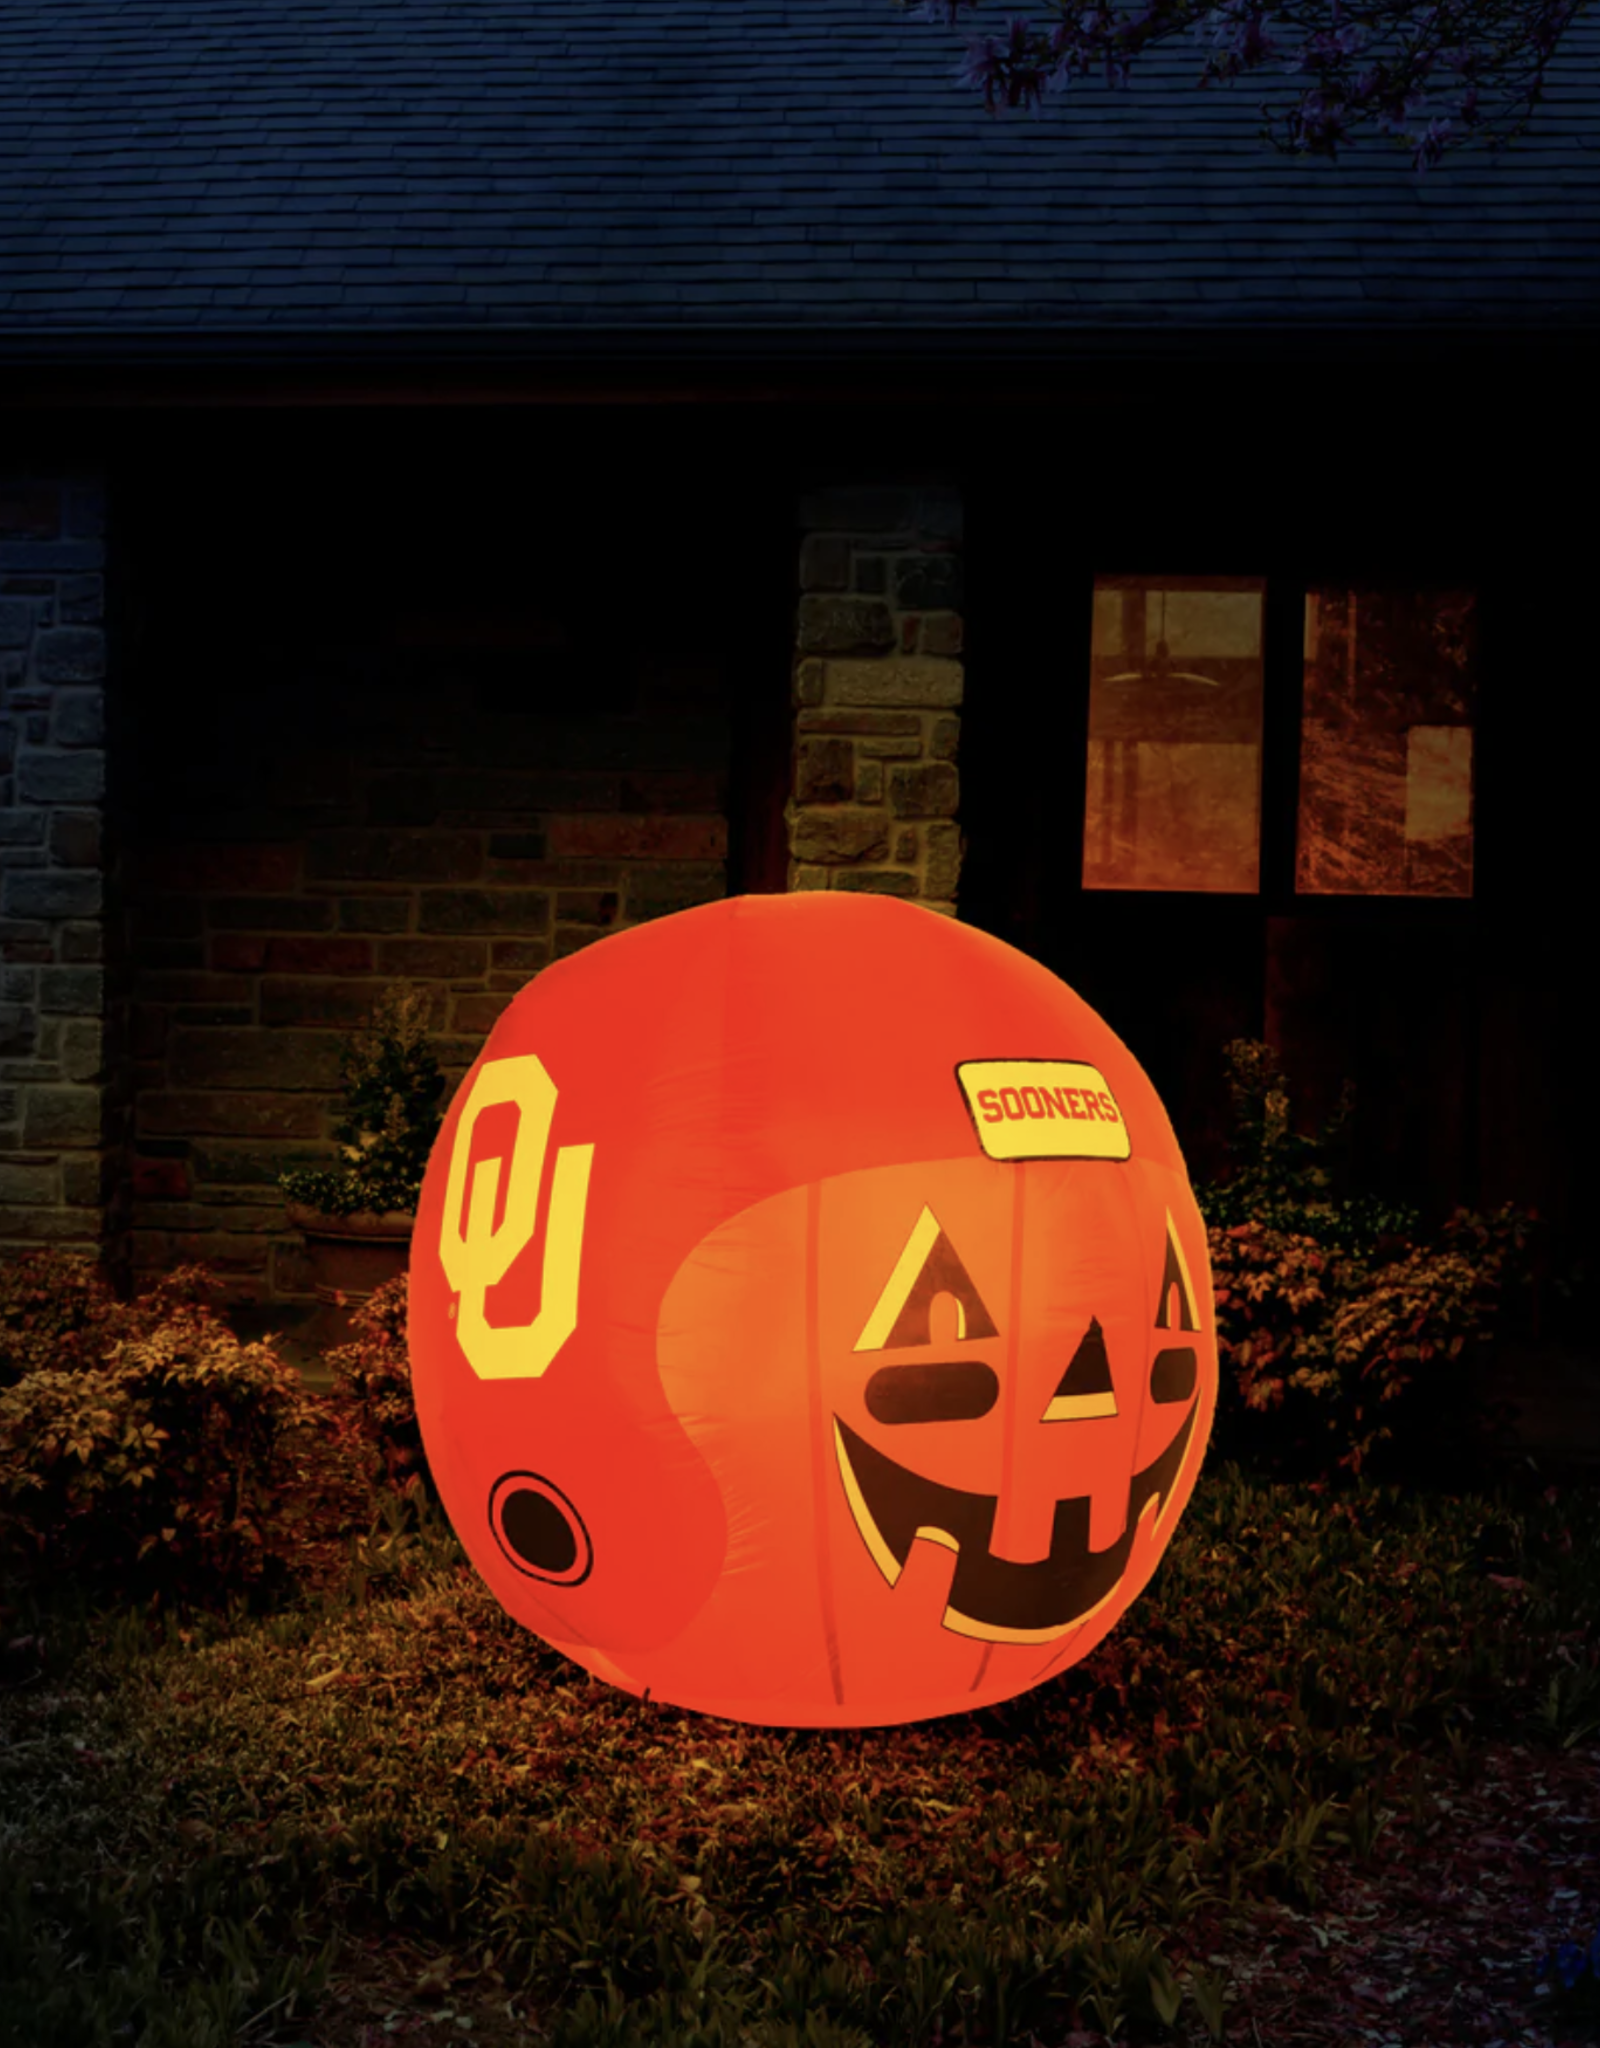 Sporticulture Oklahoma Sooners Inflatable Jack O' Lantern